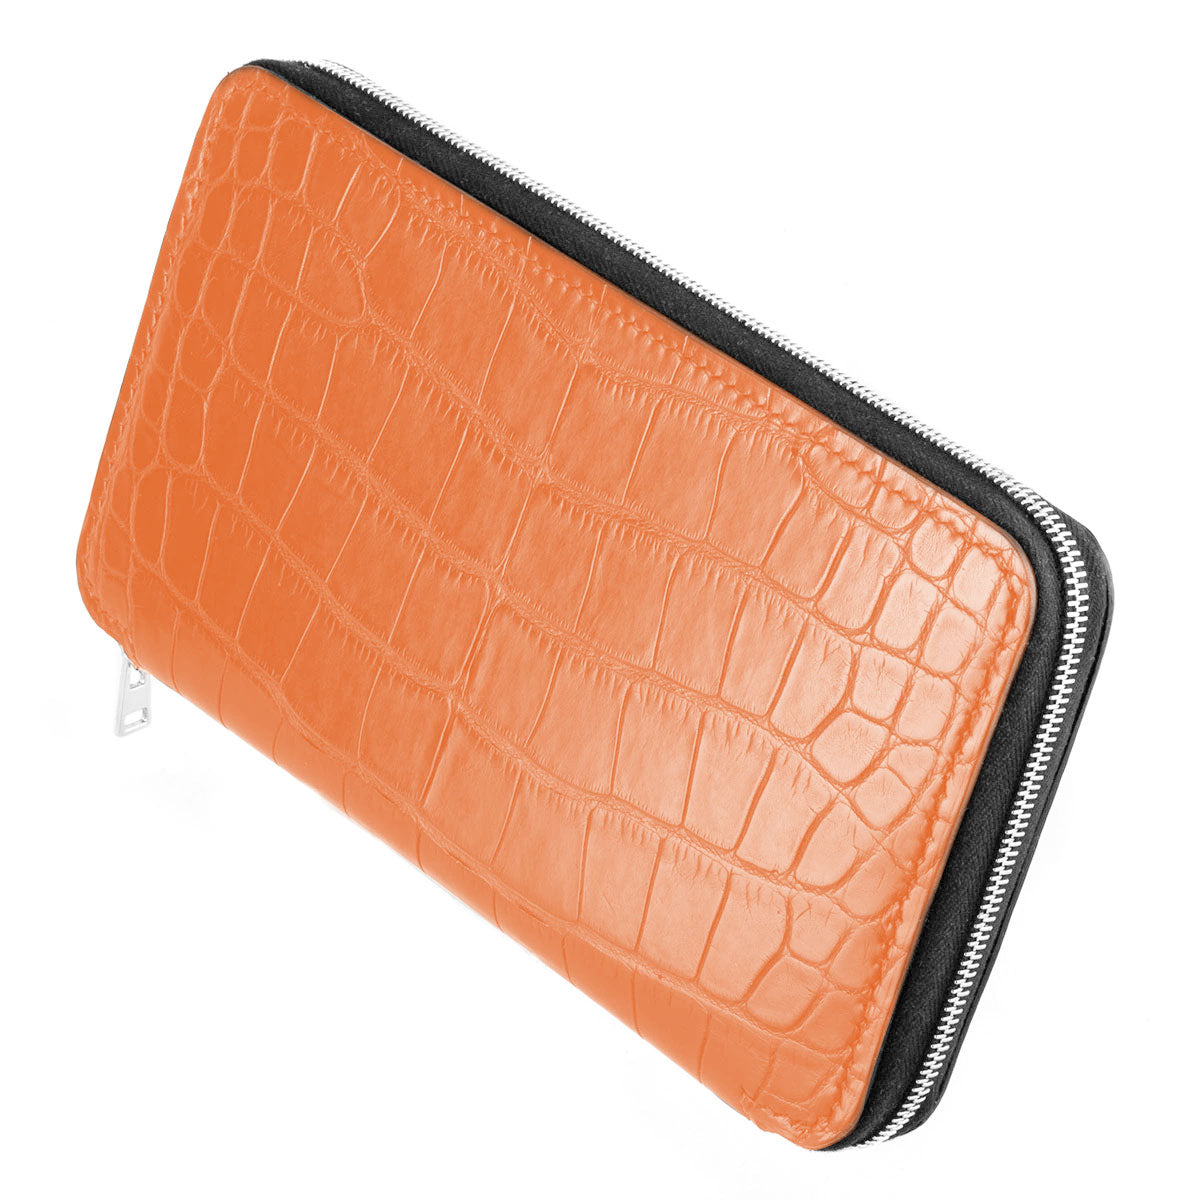 Handmade Himalaya Alligator wallet, Top Quality Alligator leather